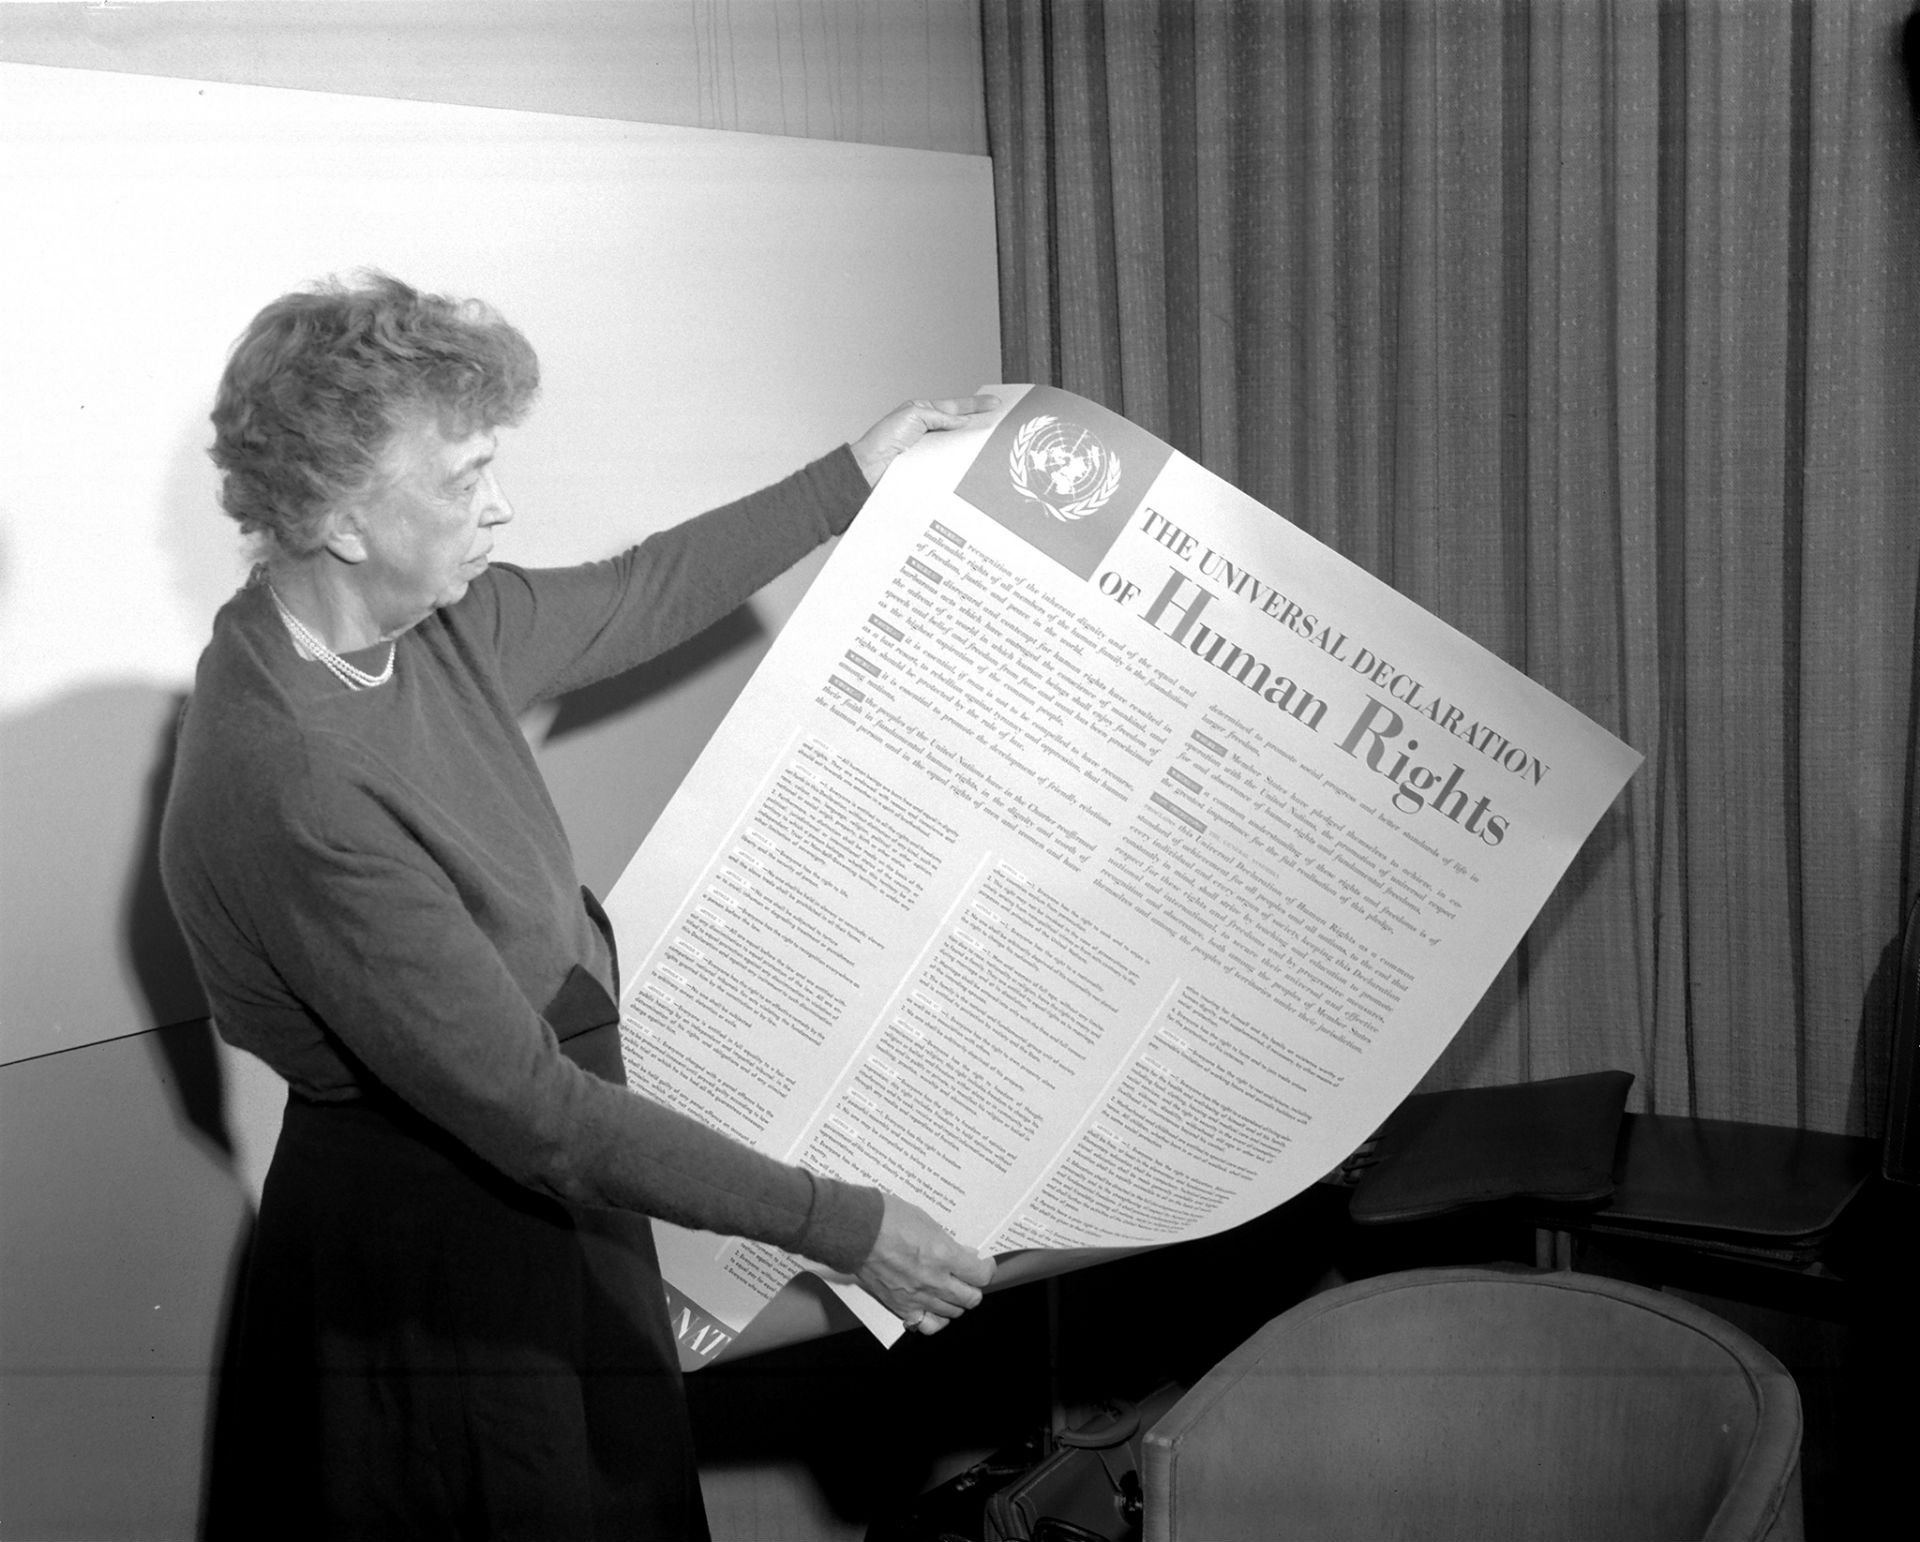 Universal_Declaration of Human Rights